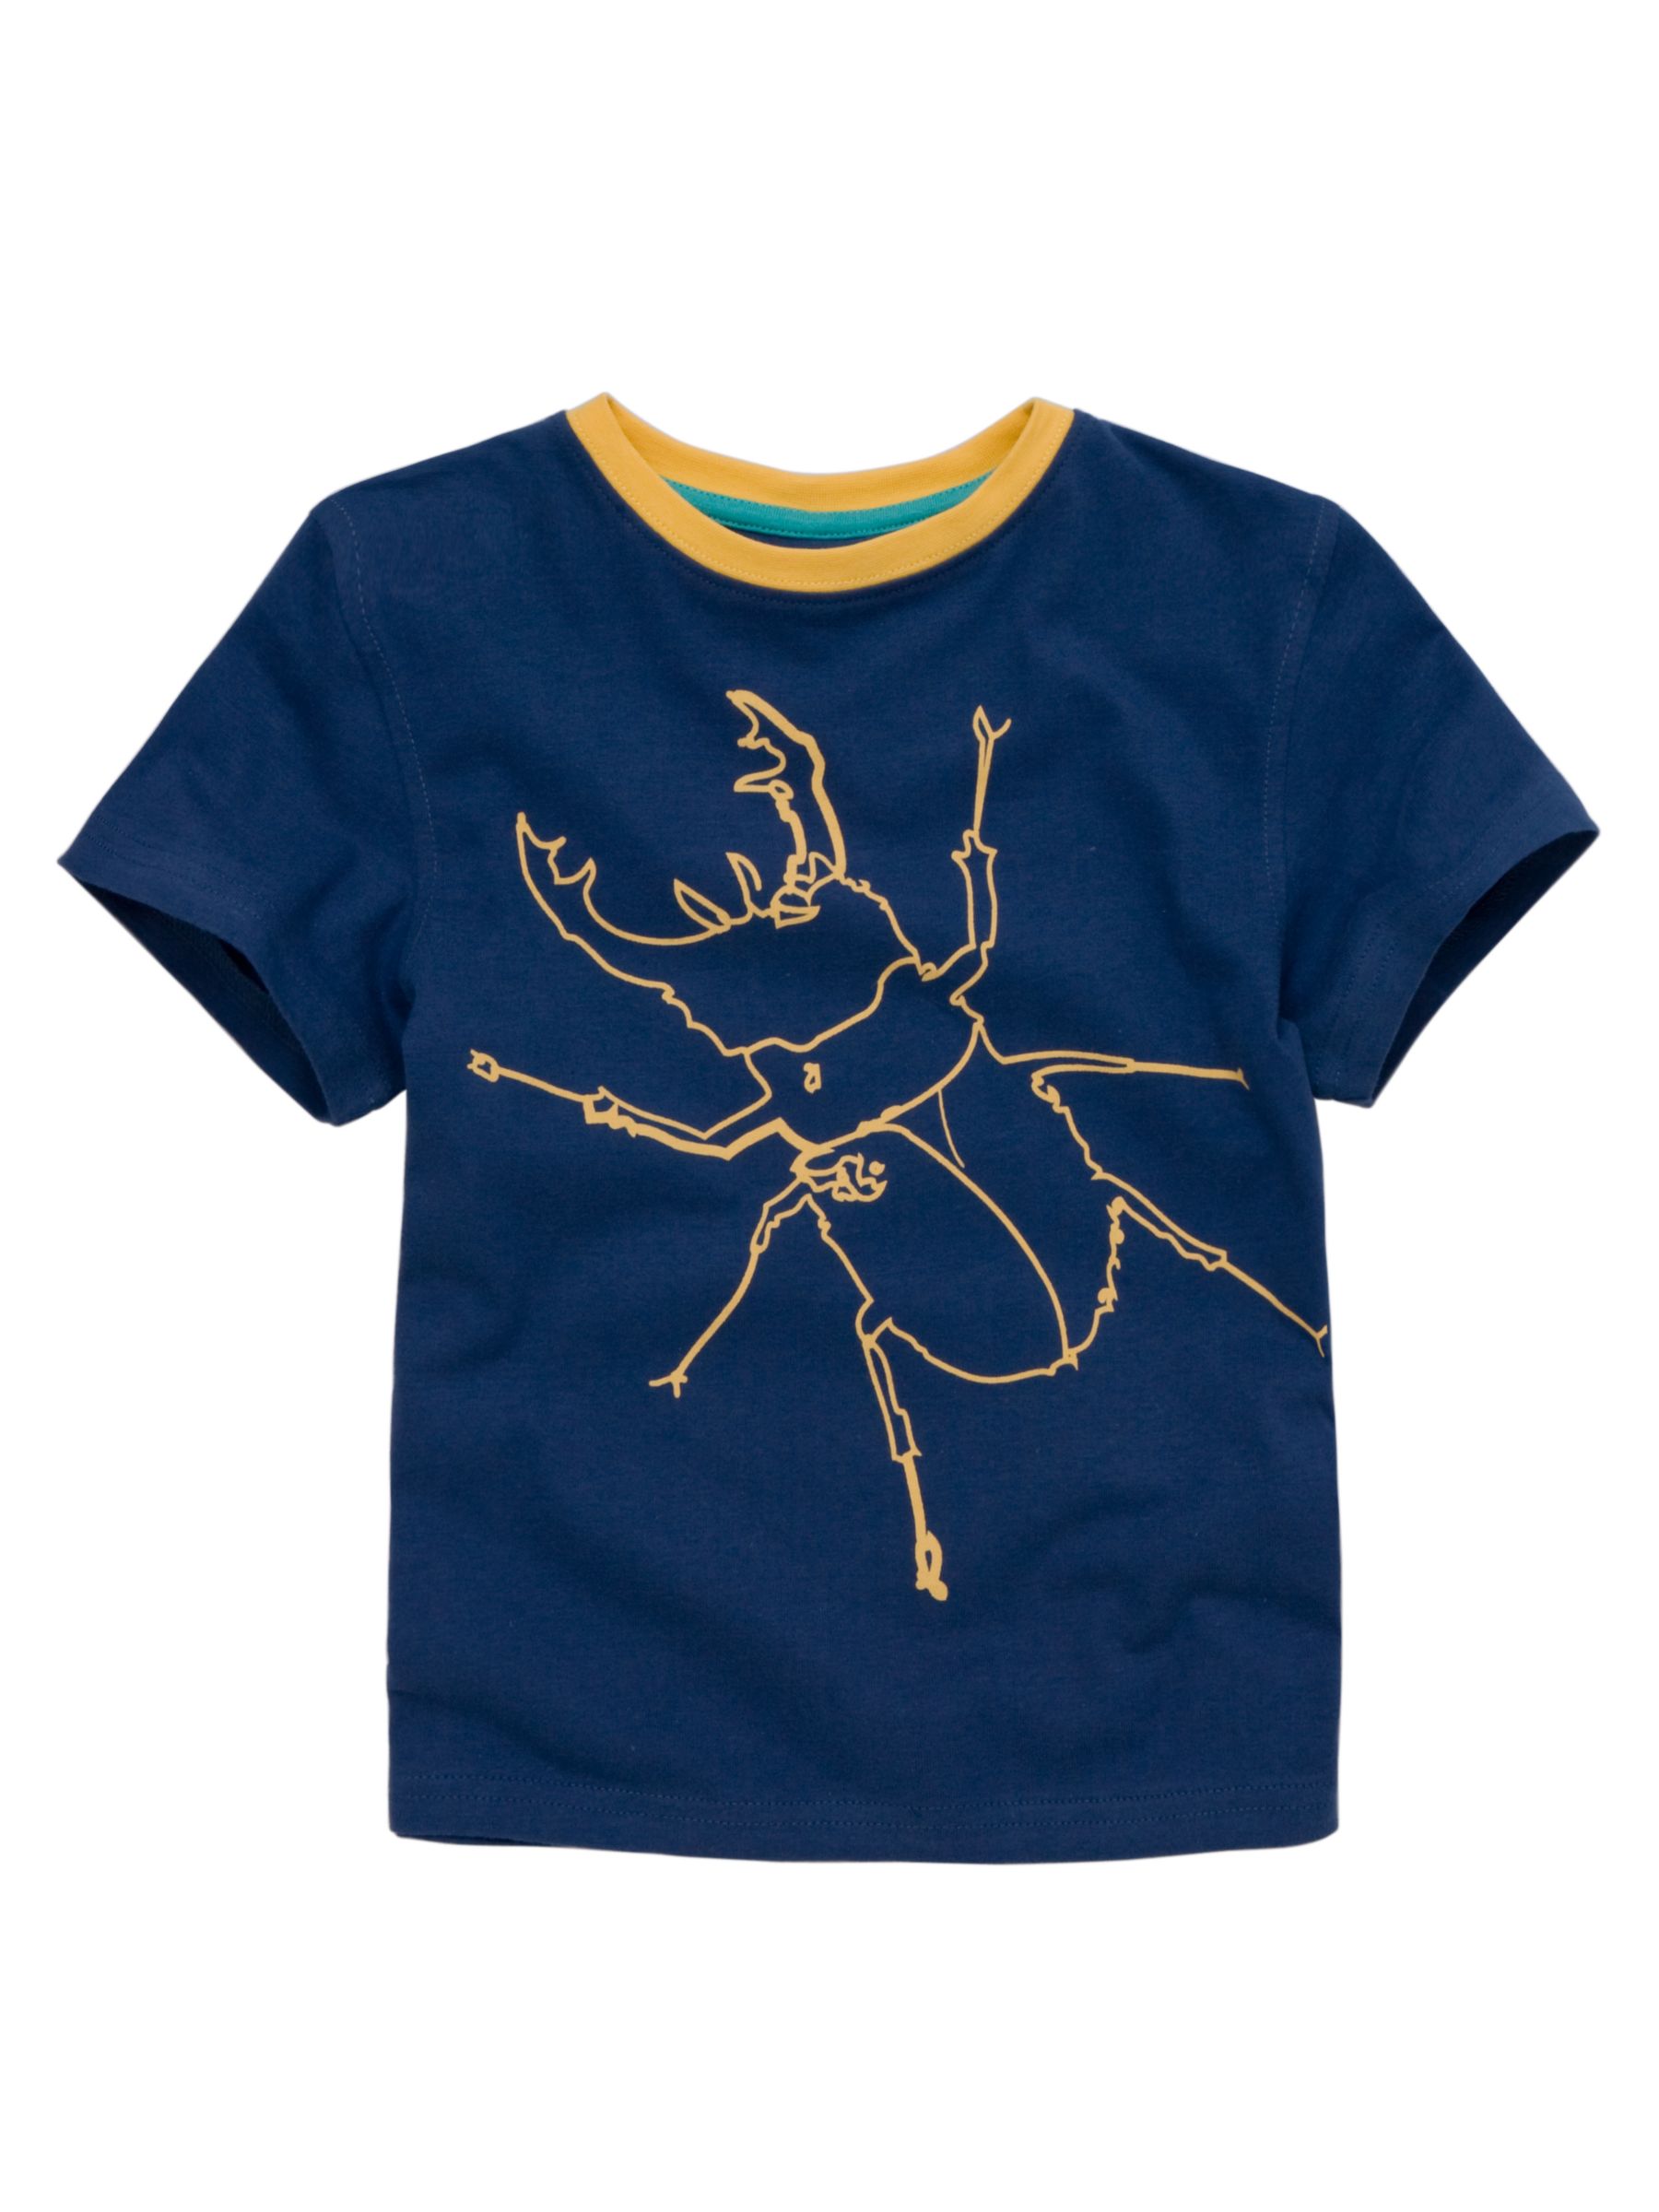 John Lewis Boy Beetle T-Shirt, Navy blue, 6 years